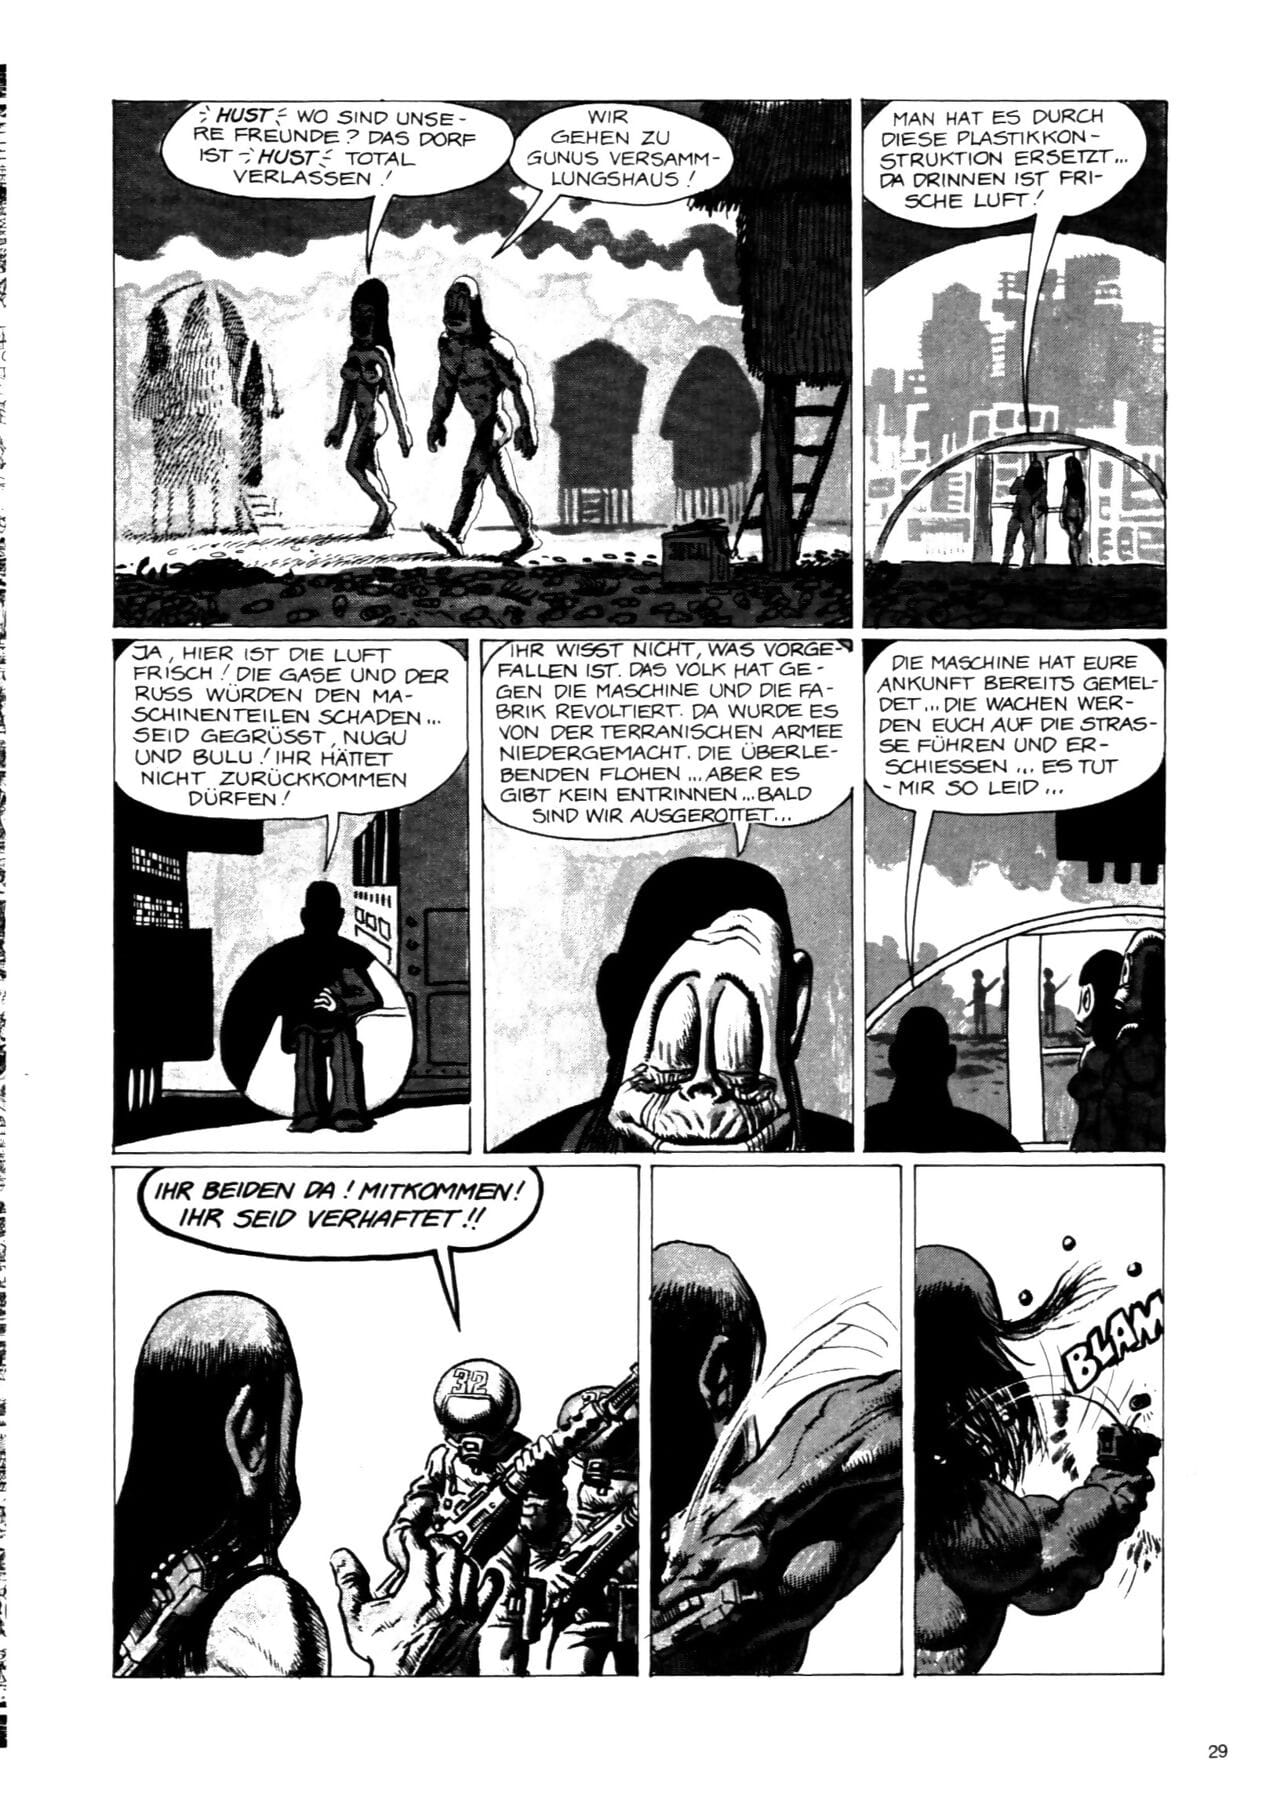 schwermetall #054 phần 2 page 1